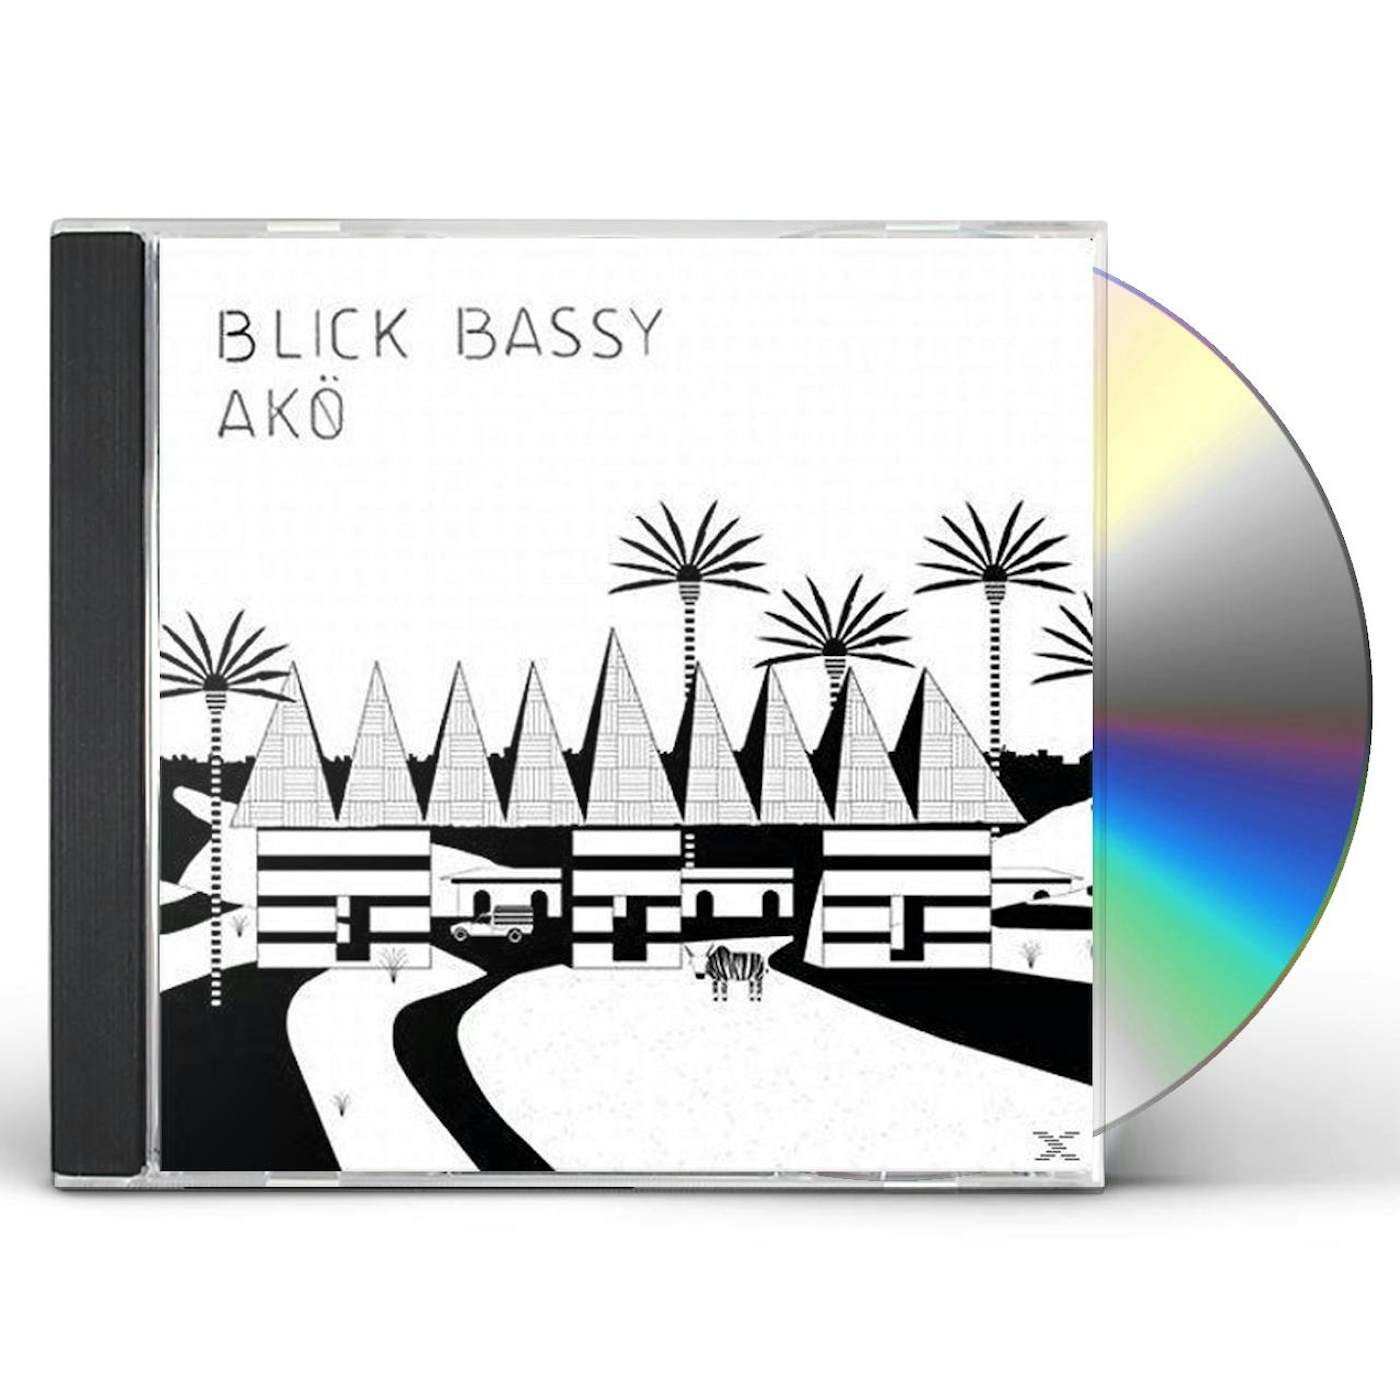 Blick Bassy AKO CD